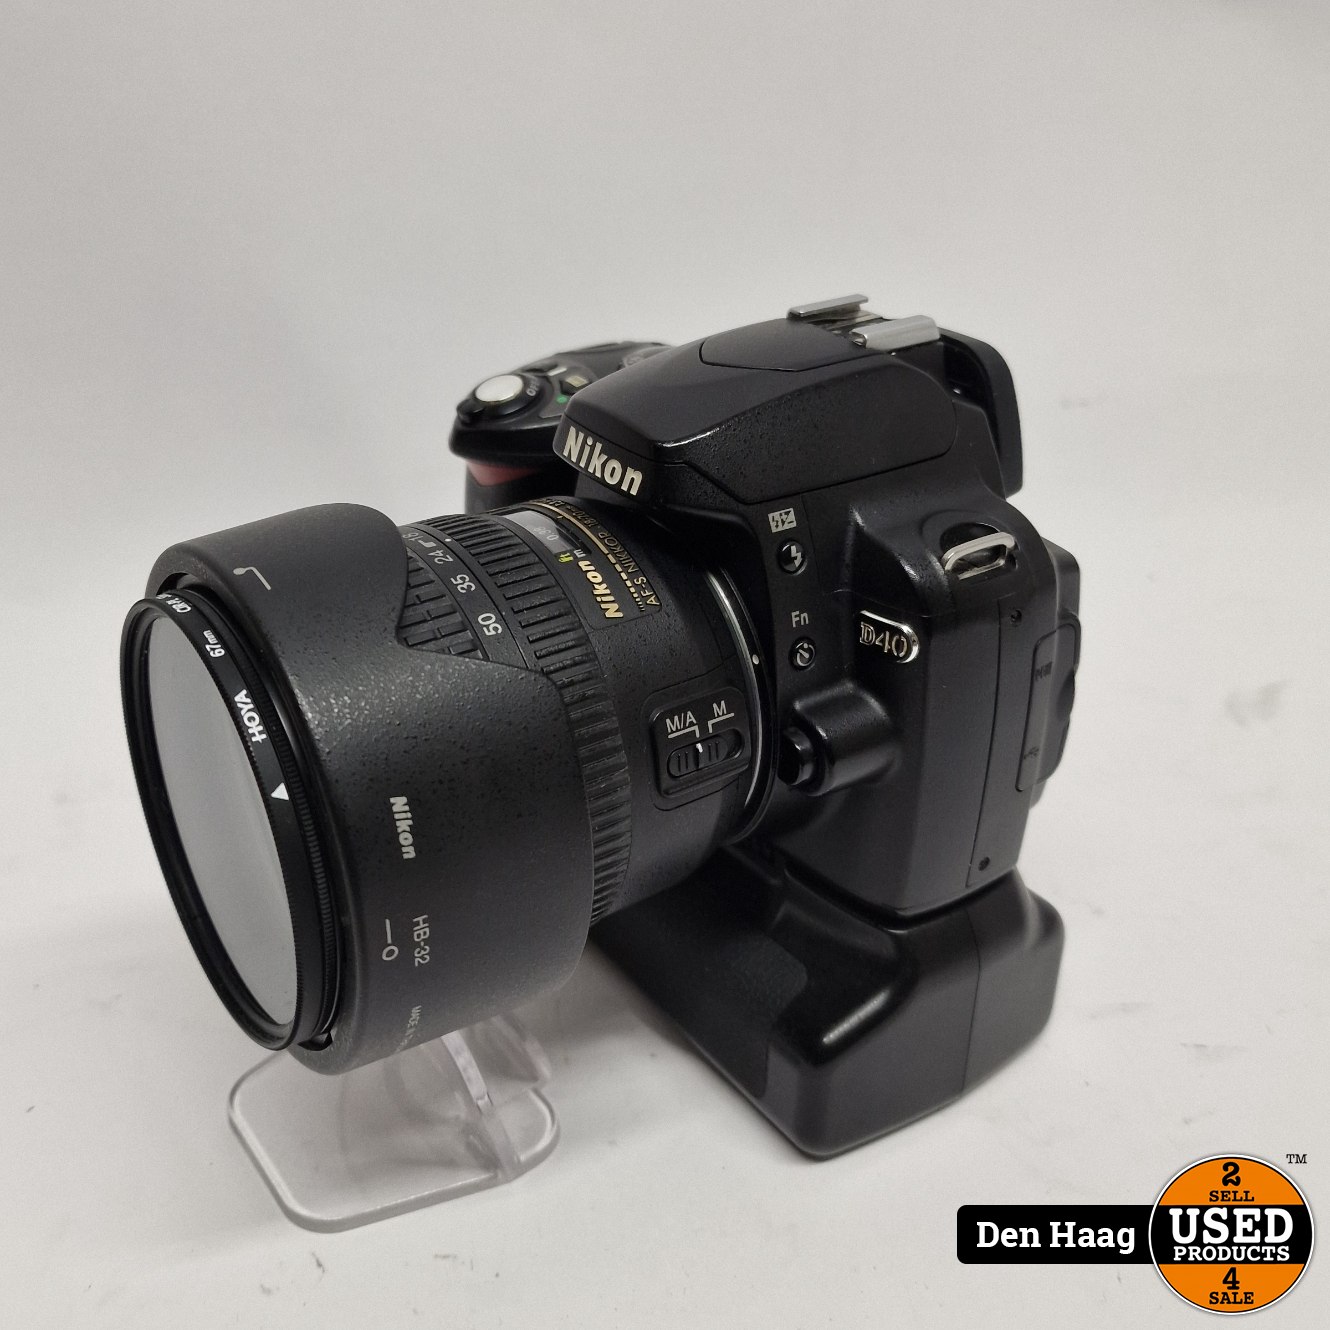 Nikon D40 digitale spiegelreflex camera + Lens | Inc garantie - Used  Products Den Haag